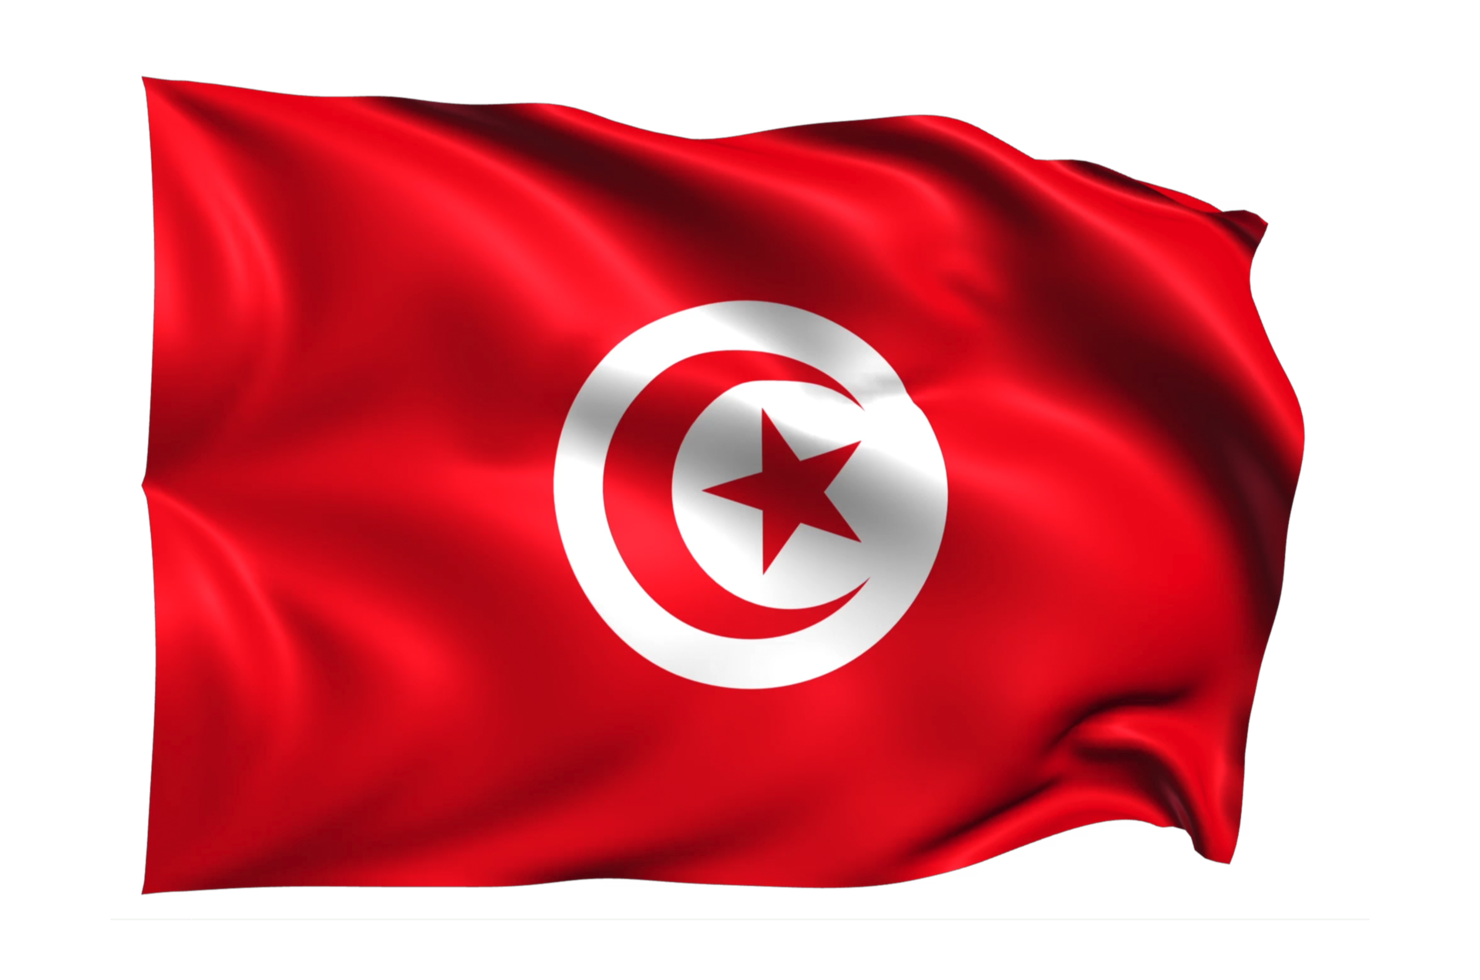 territoire tunisien agitant le drapeau png